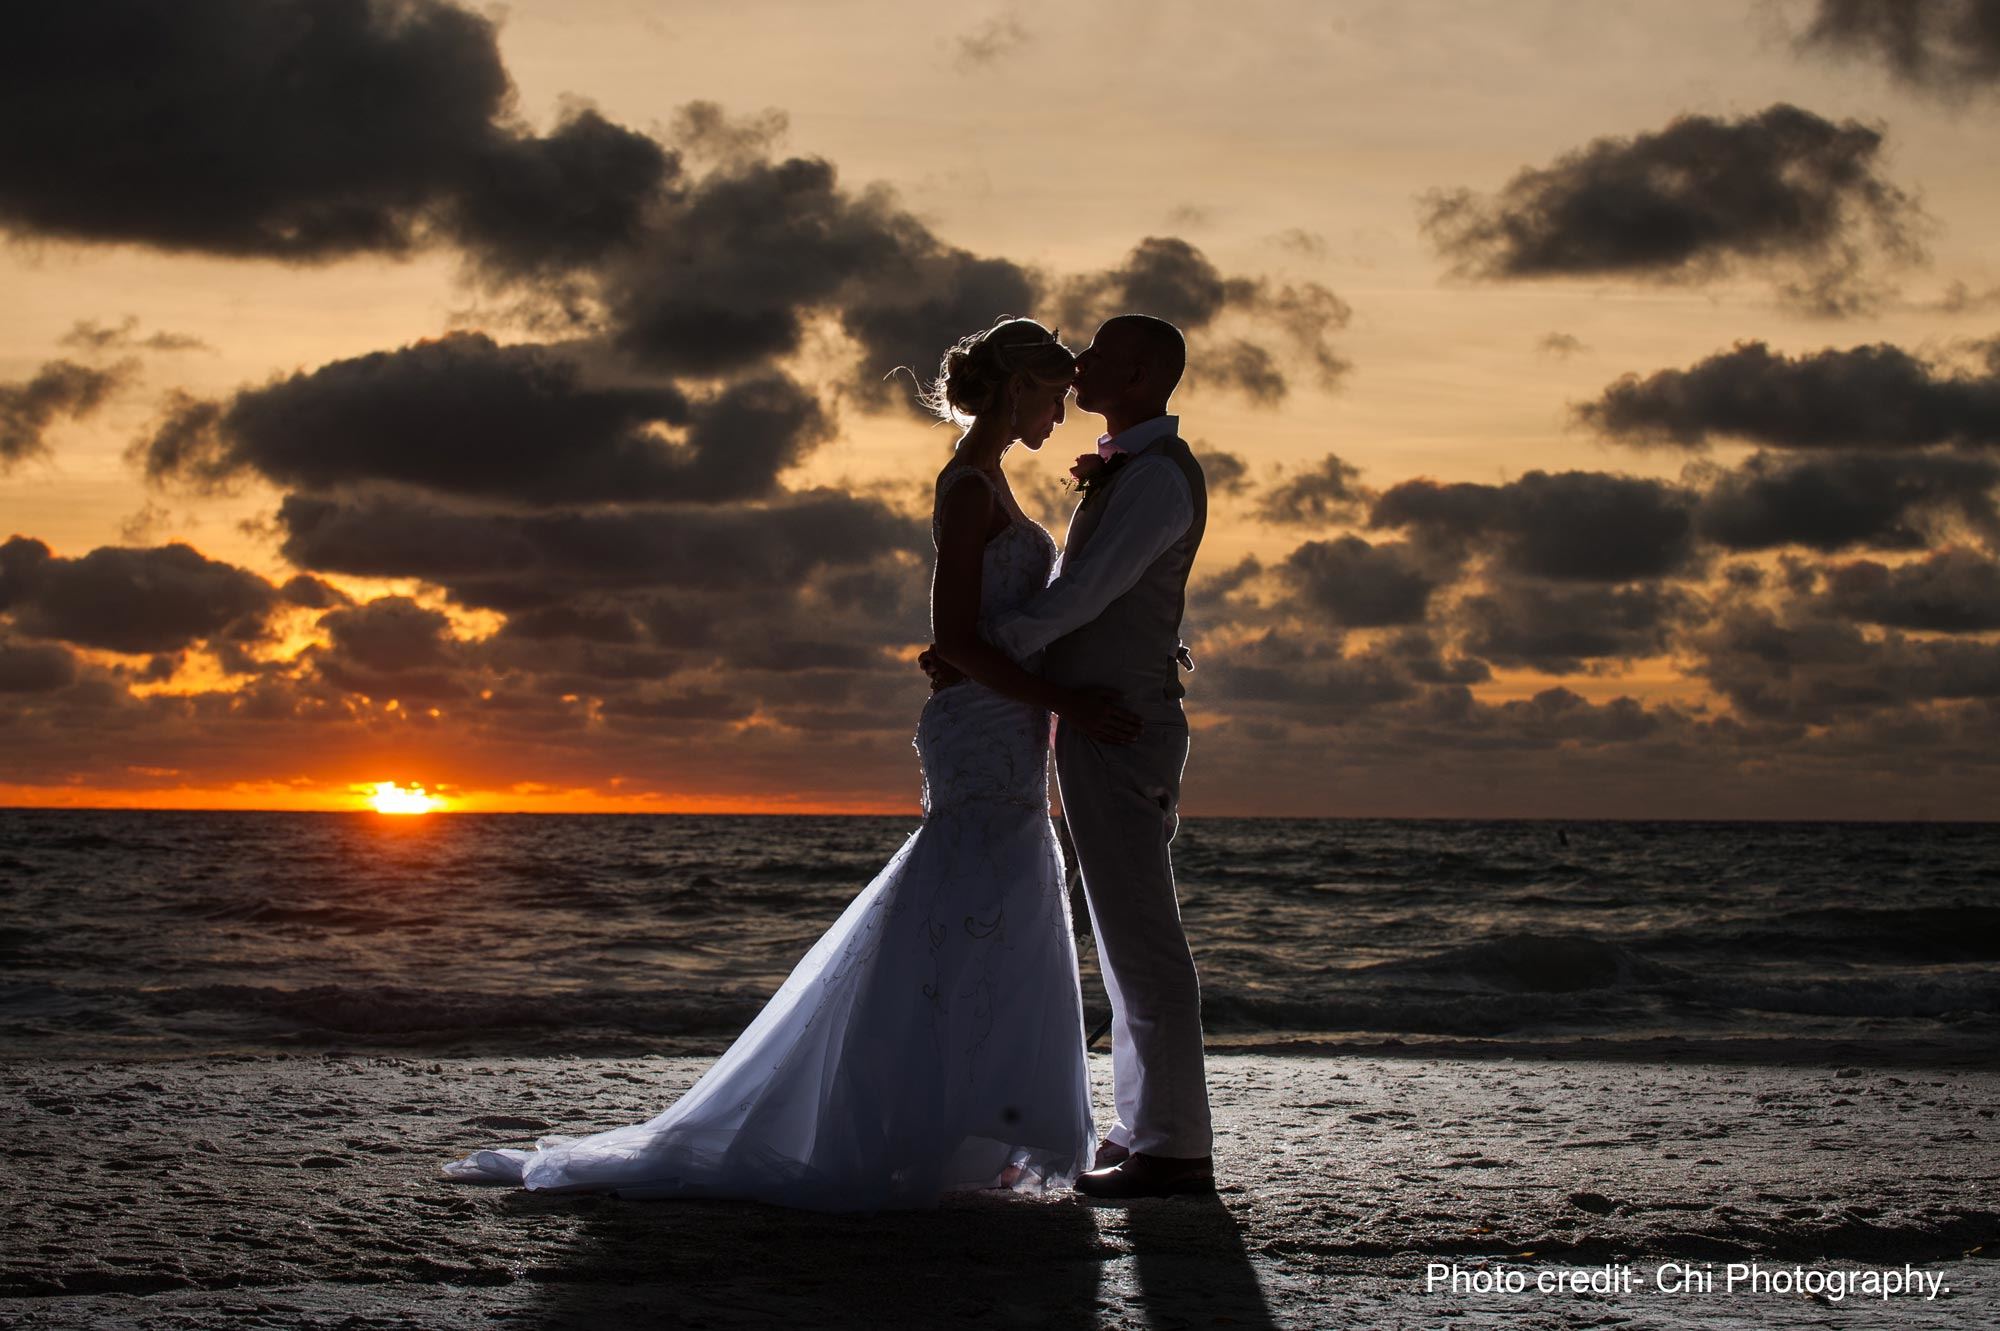 Sunset Weddings by Gulf Drive Café - 1